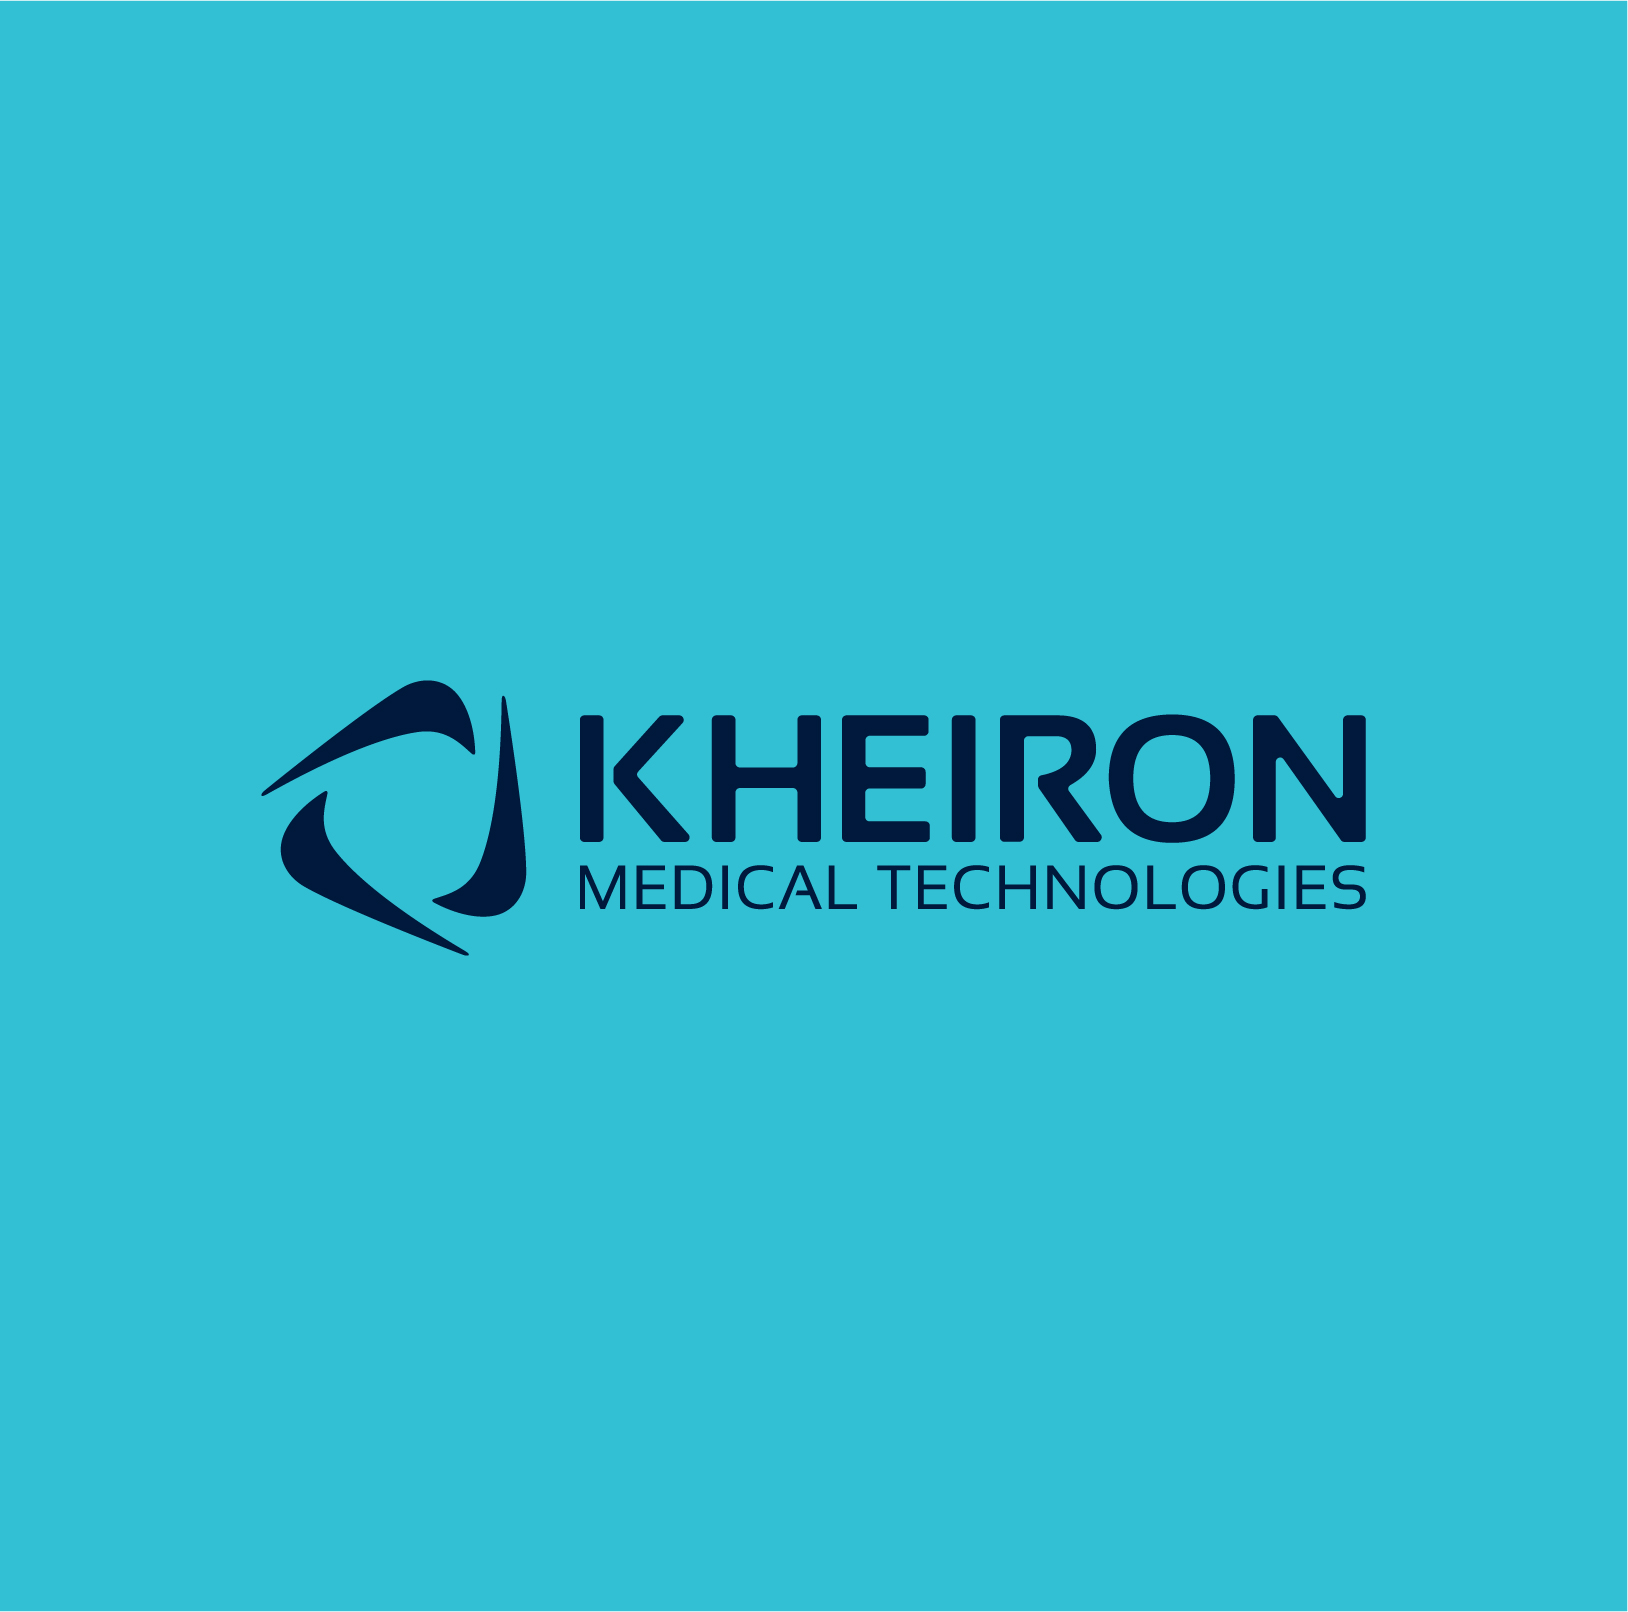 Kheiron Medical